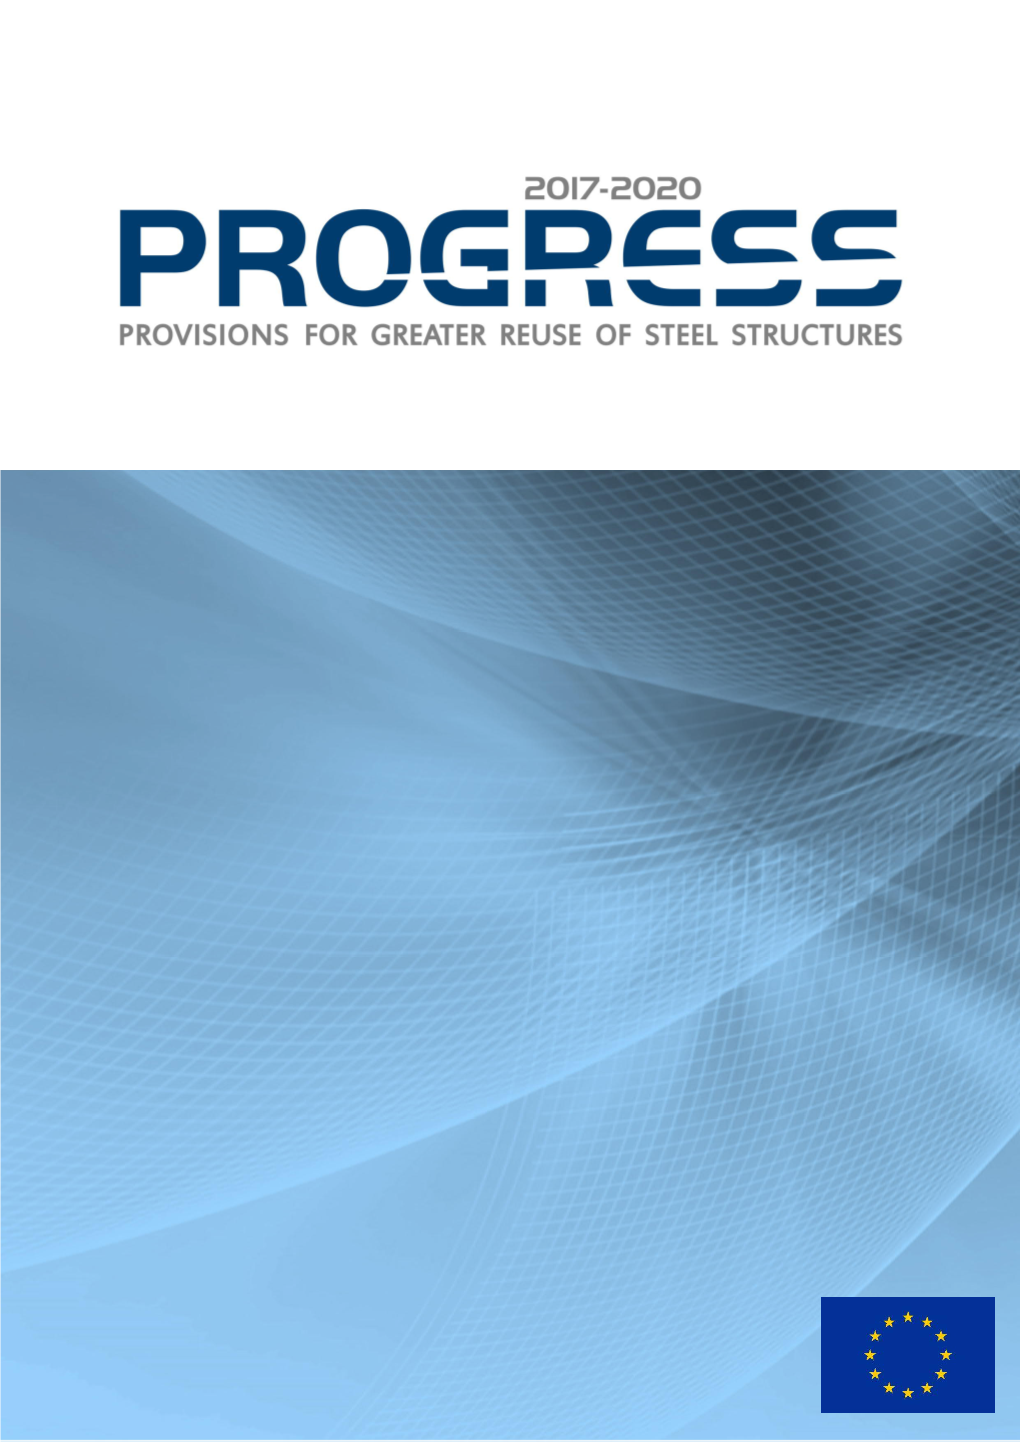 PROGRESS-Final-Report-For-Web.Pdf